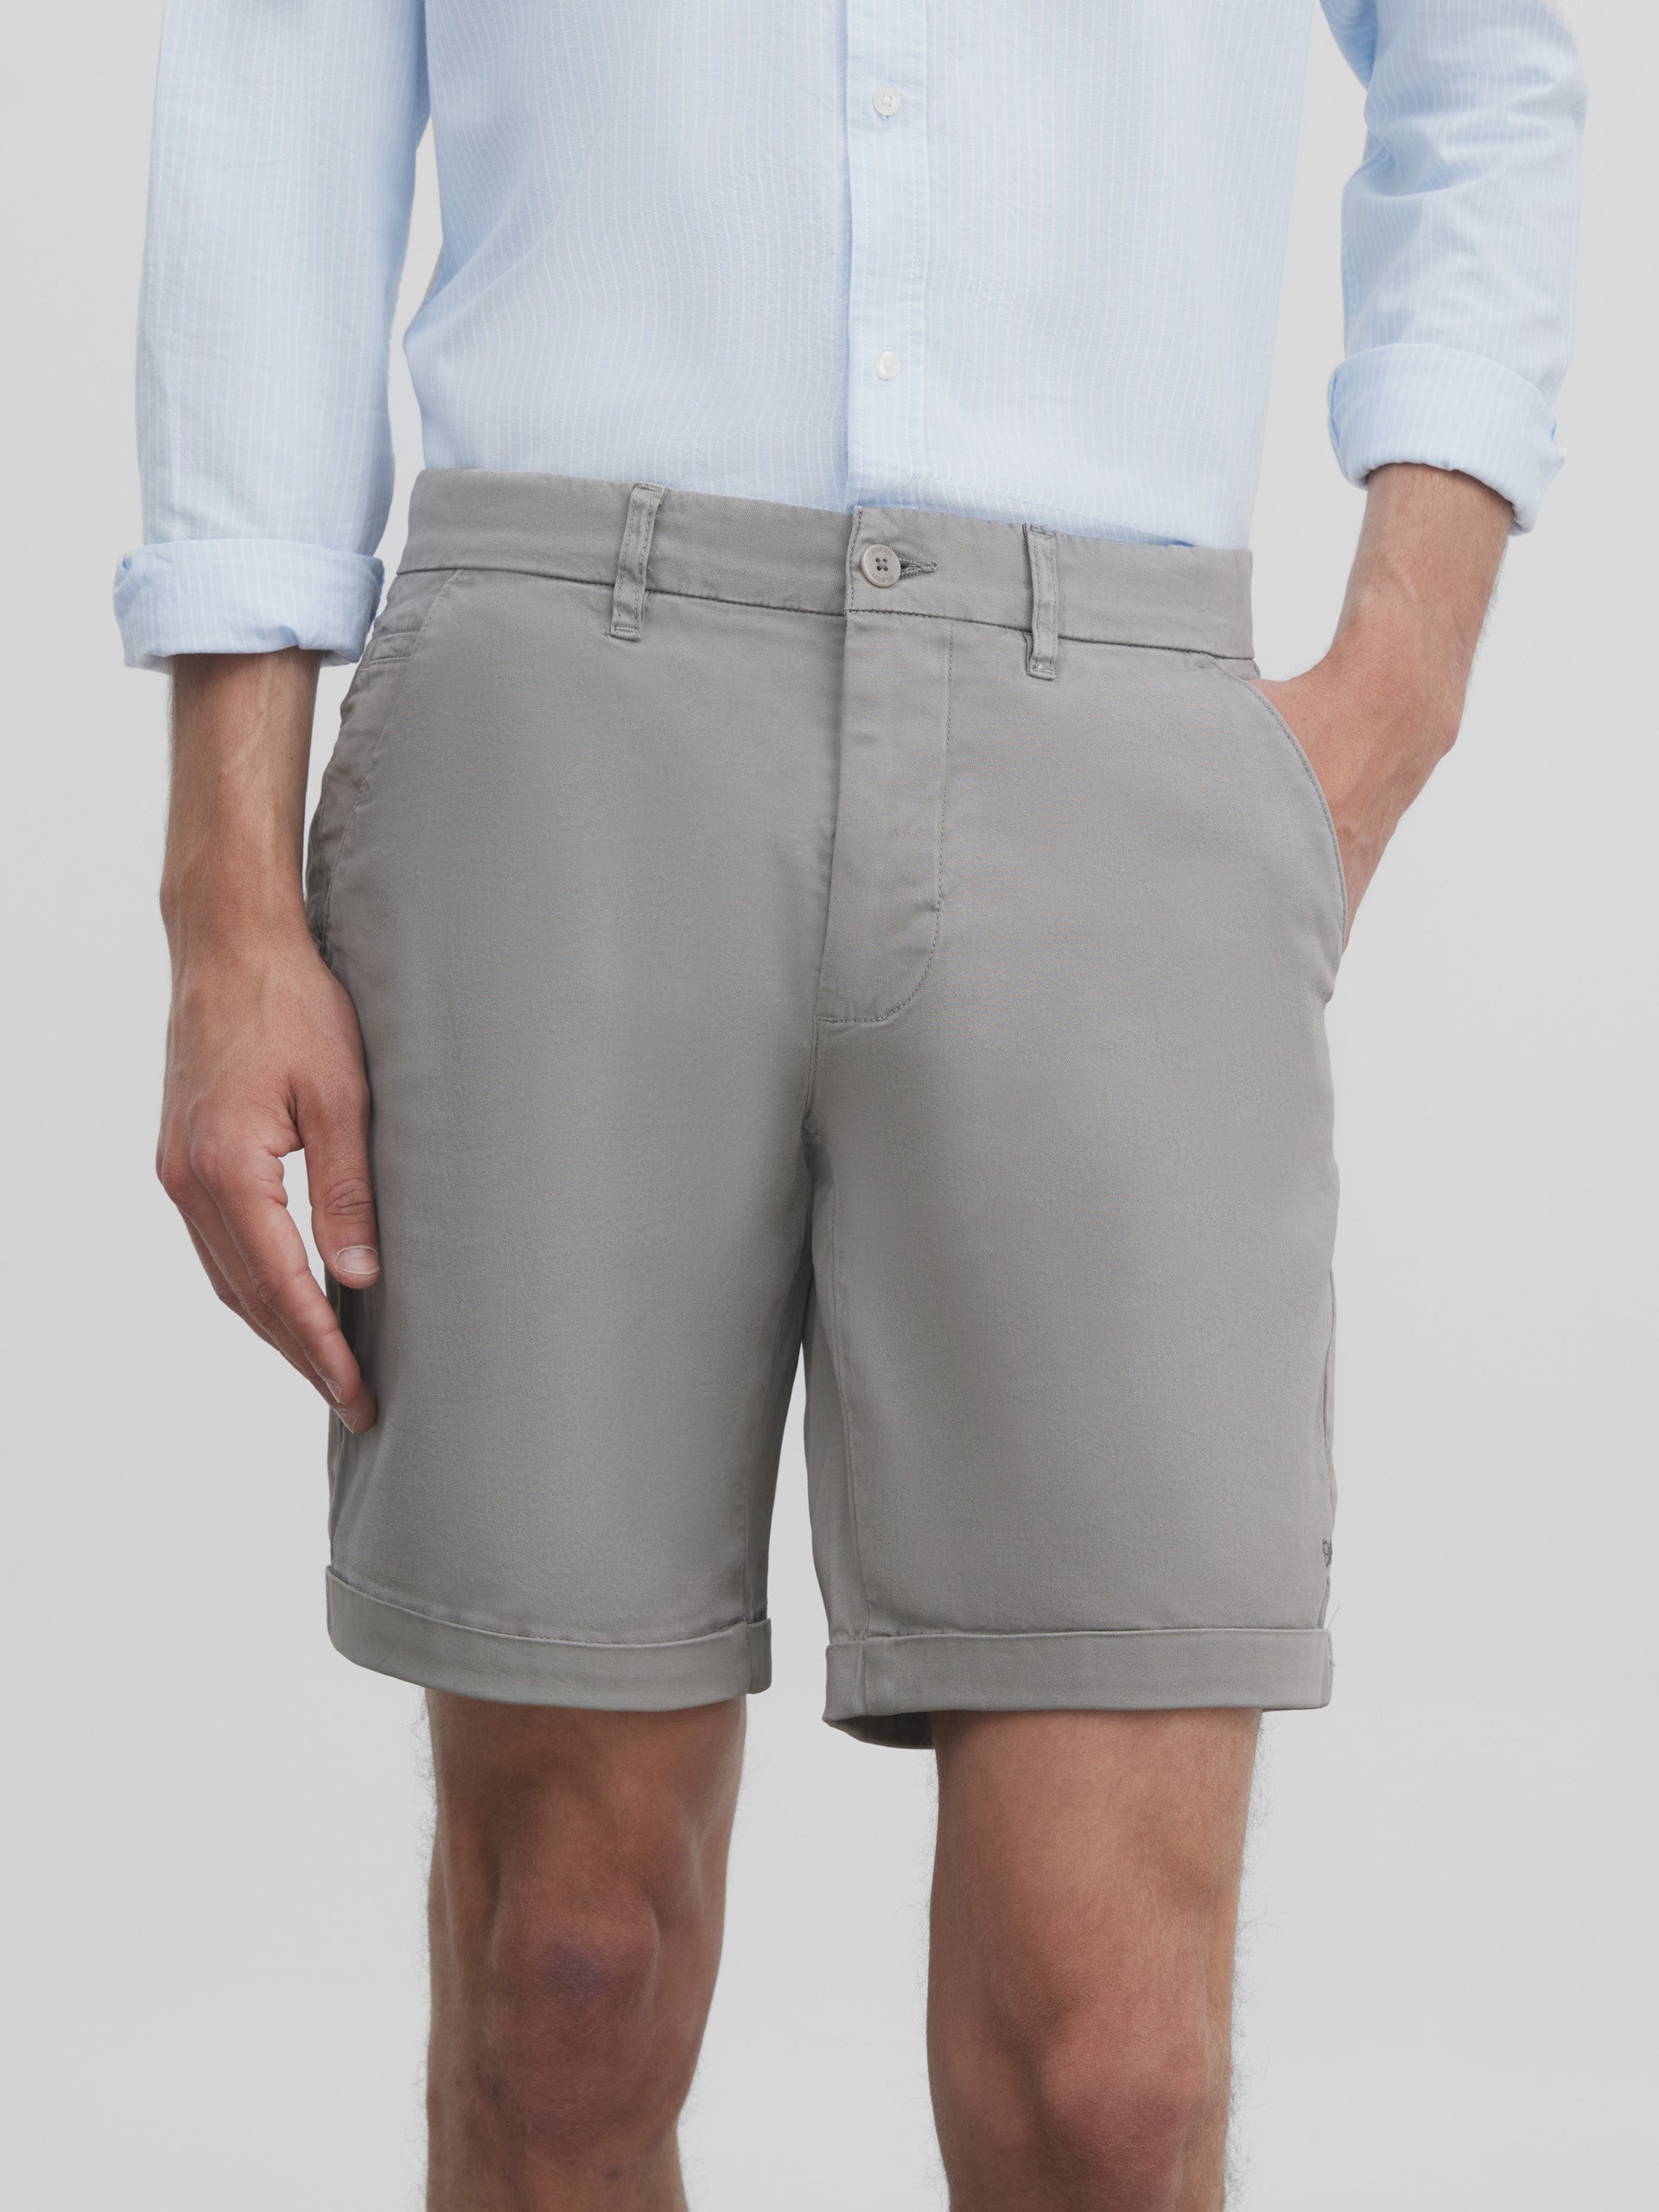 Classic gray Silbon Bermuda shorts